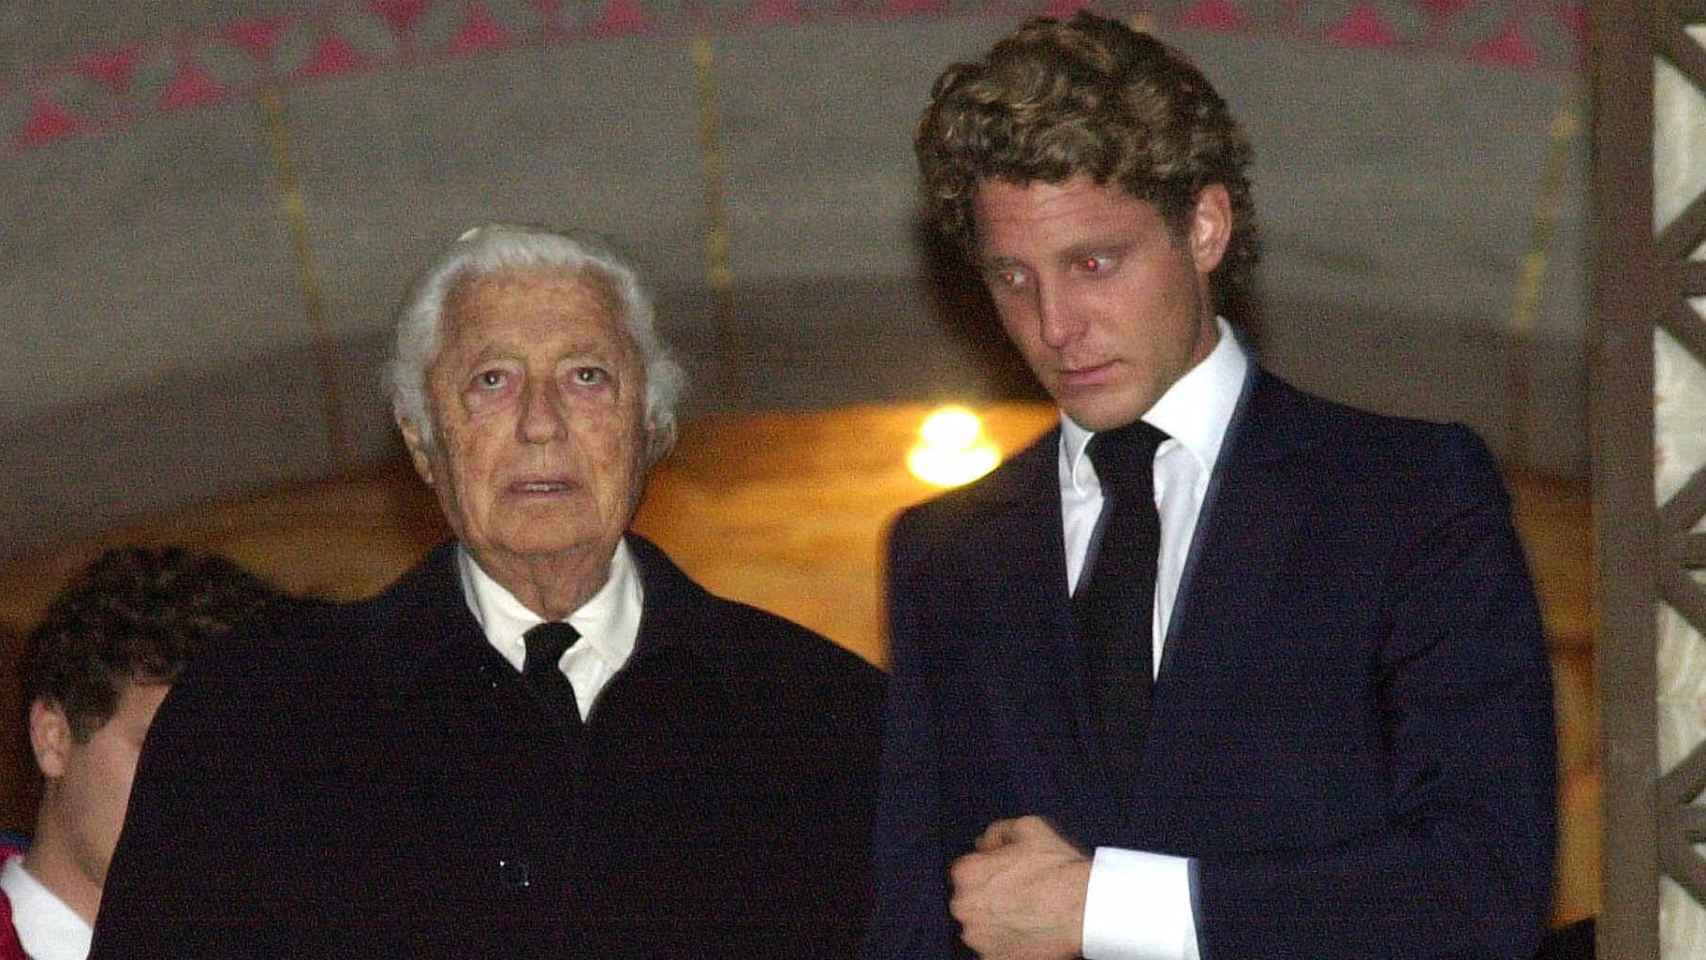 Lapo con su abuelo, Gianni Agnelli, en el año 2000